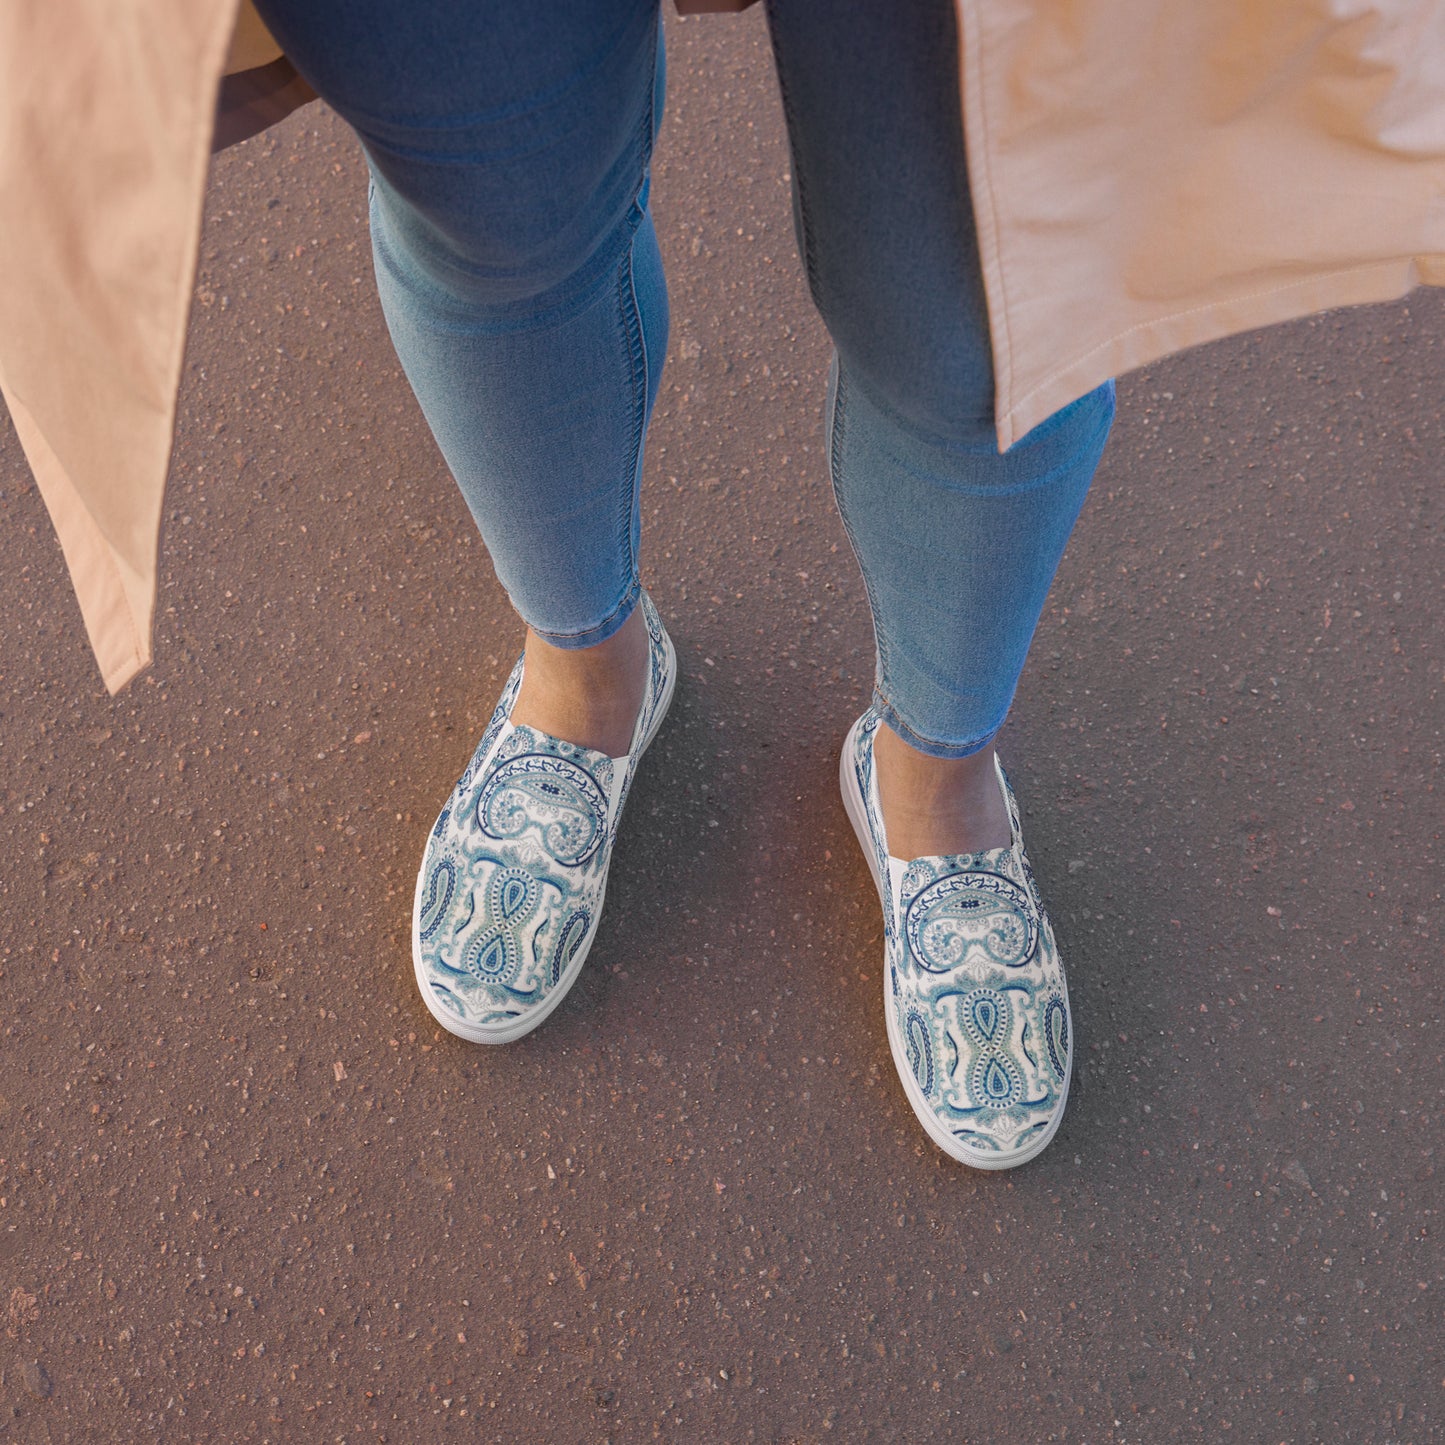 Women’s slip-on canvas shoes Cool White Blue Paisley Design by IOBI Original Apparel